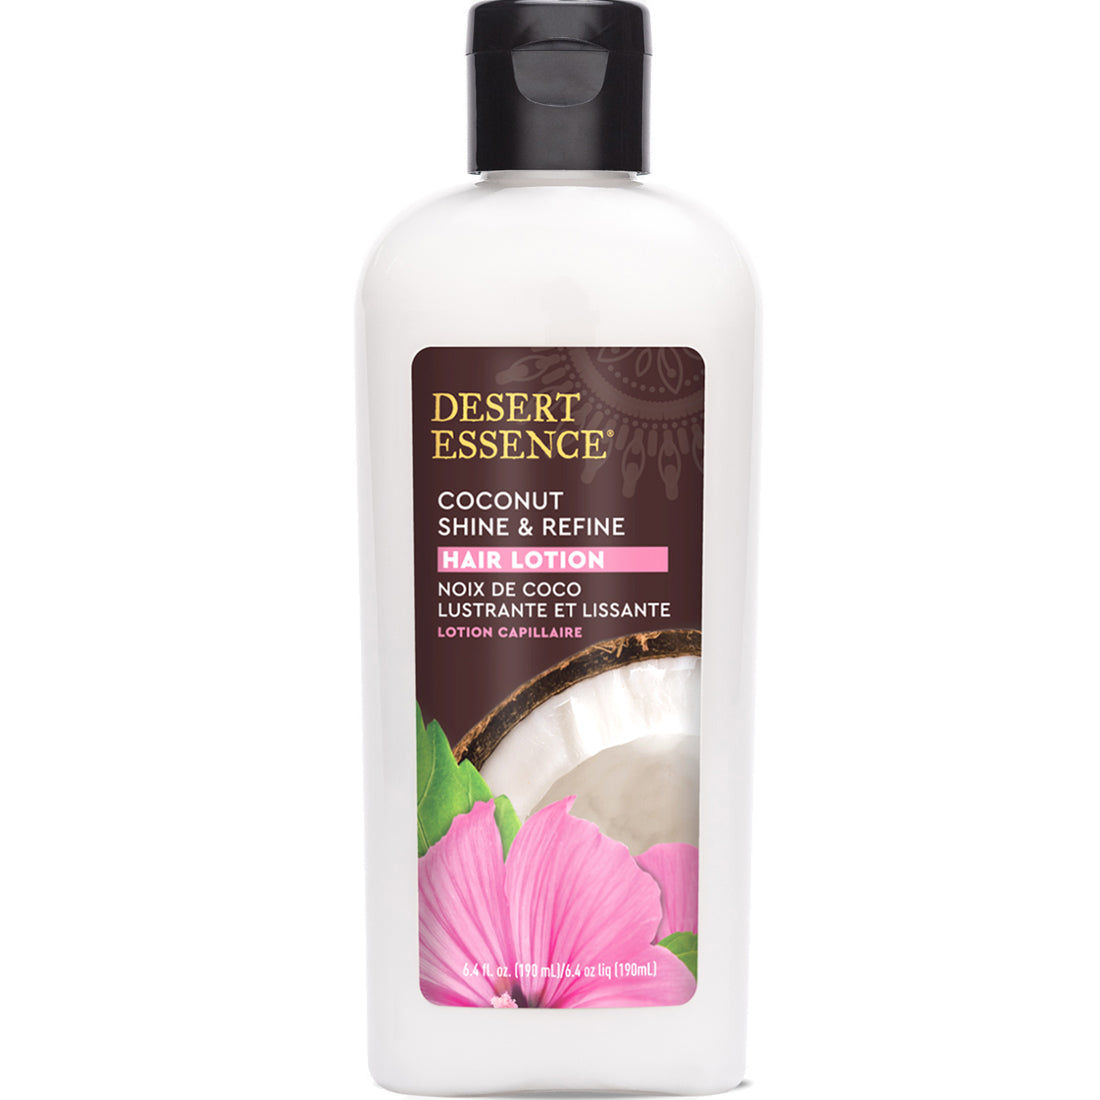 Desert Essence Coconut Shine and Refine Hair Lotion, 190ml